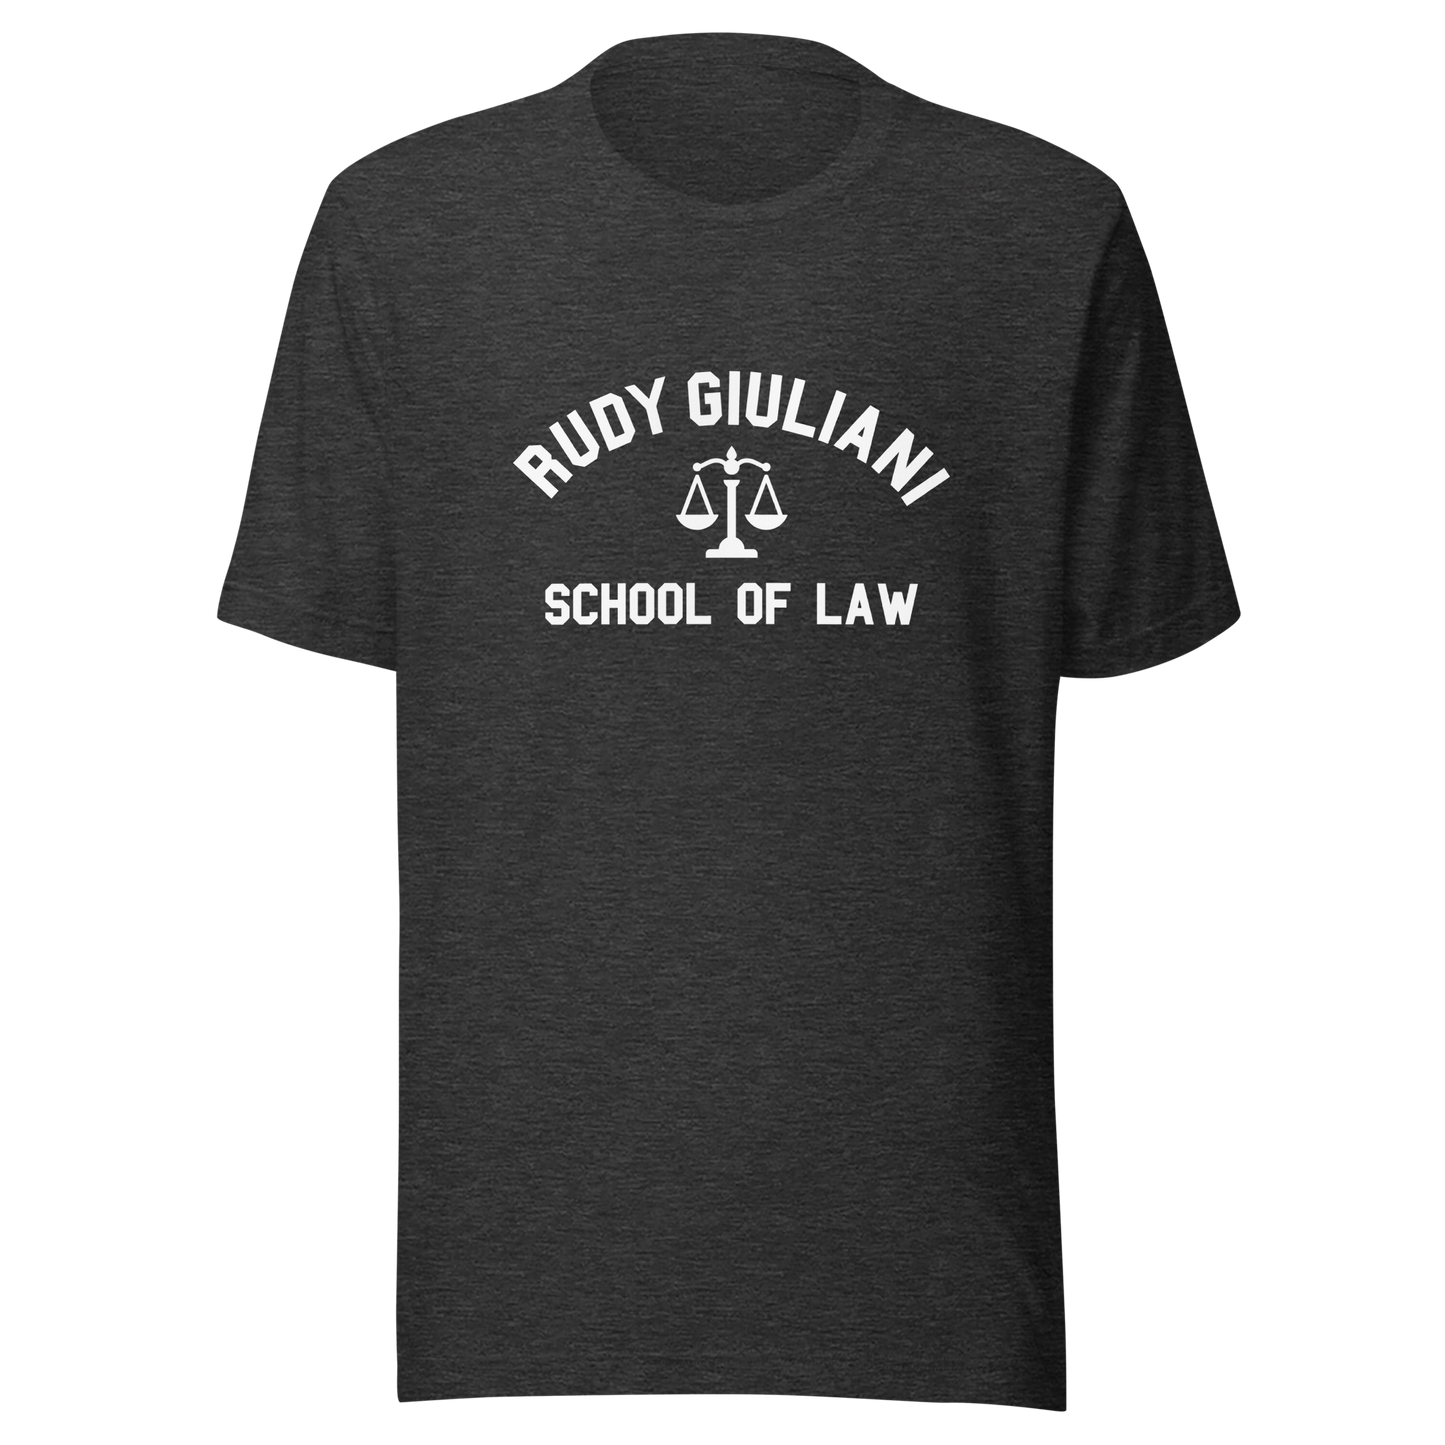 Rudy Giuliani School of Law t-shirt